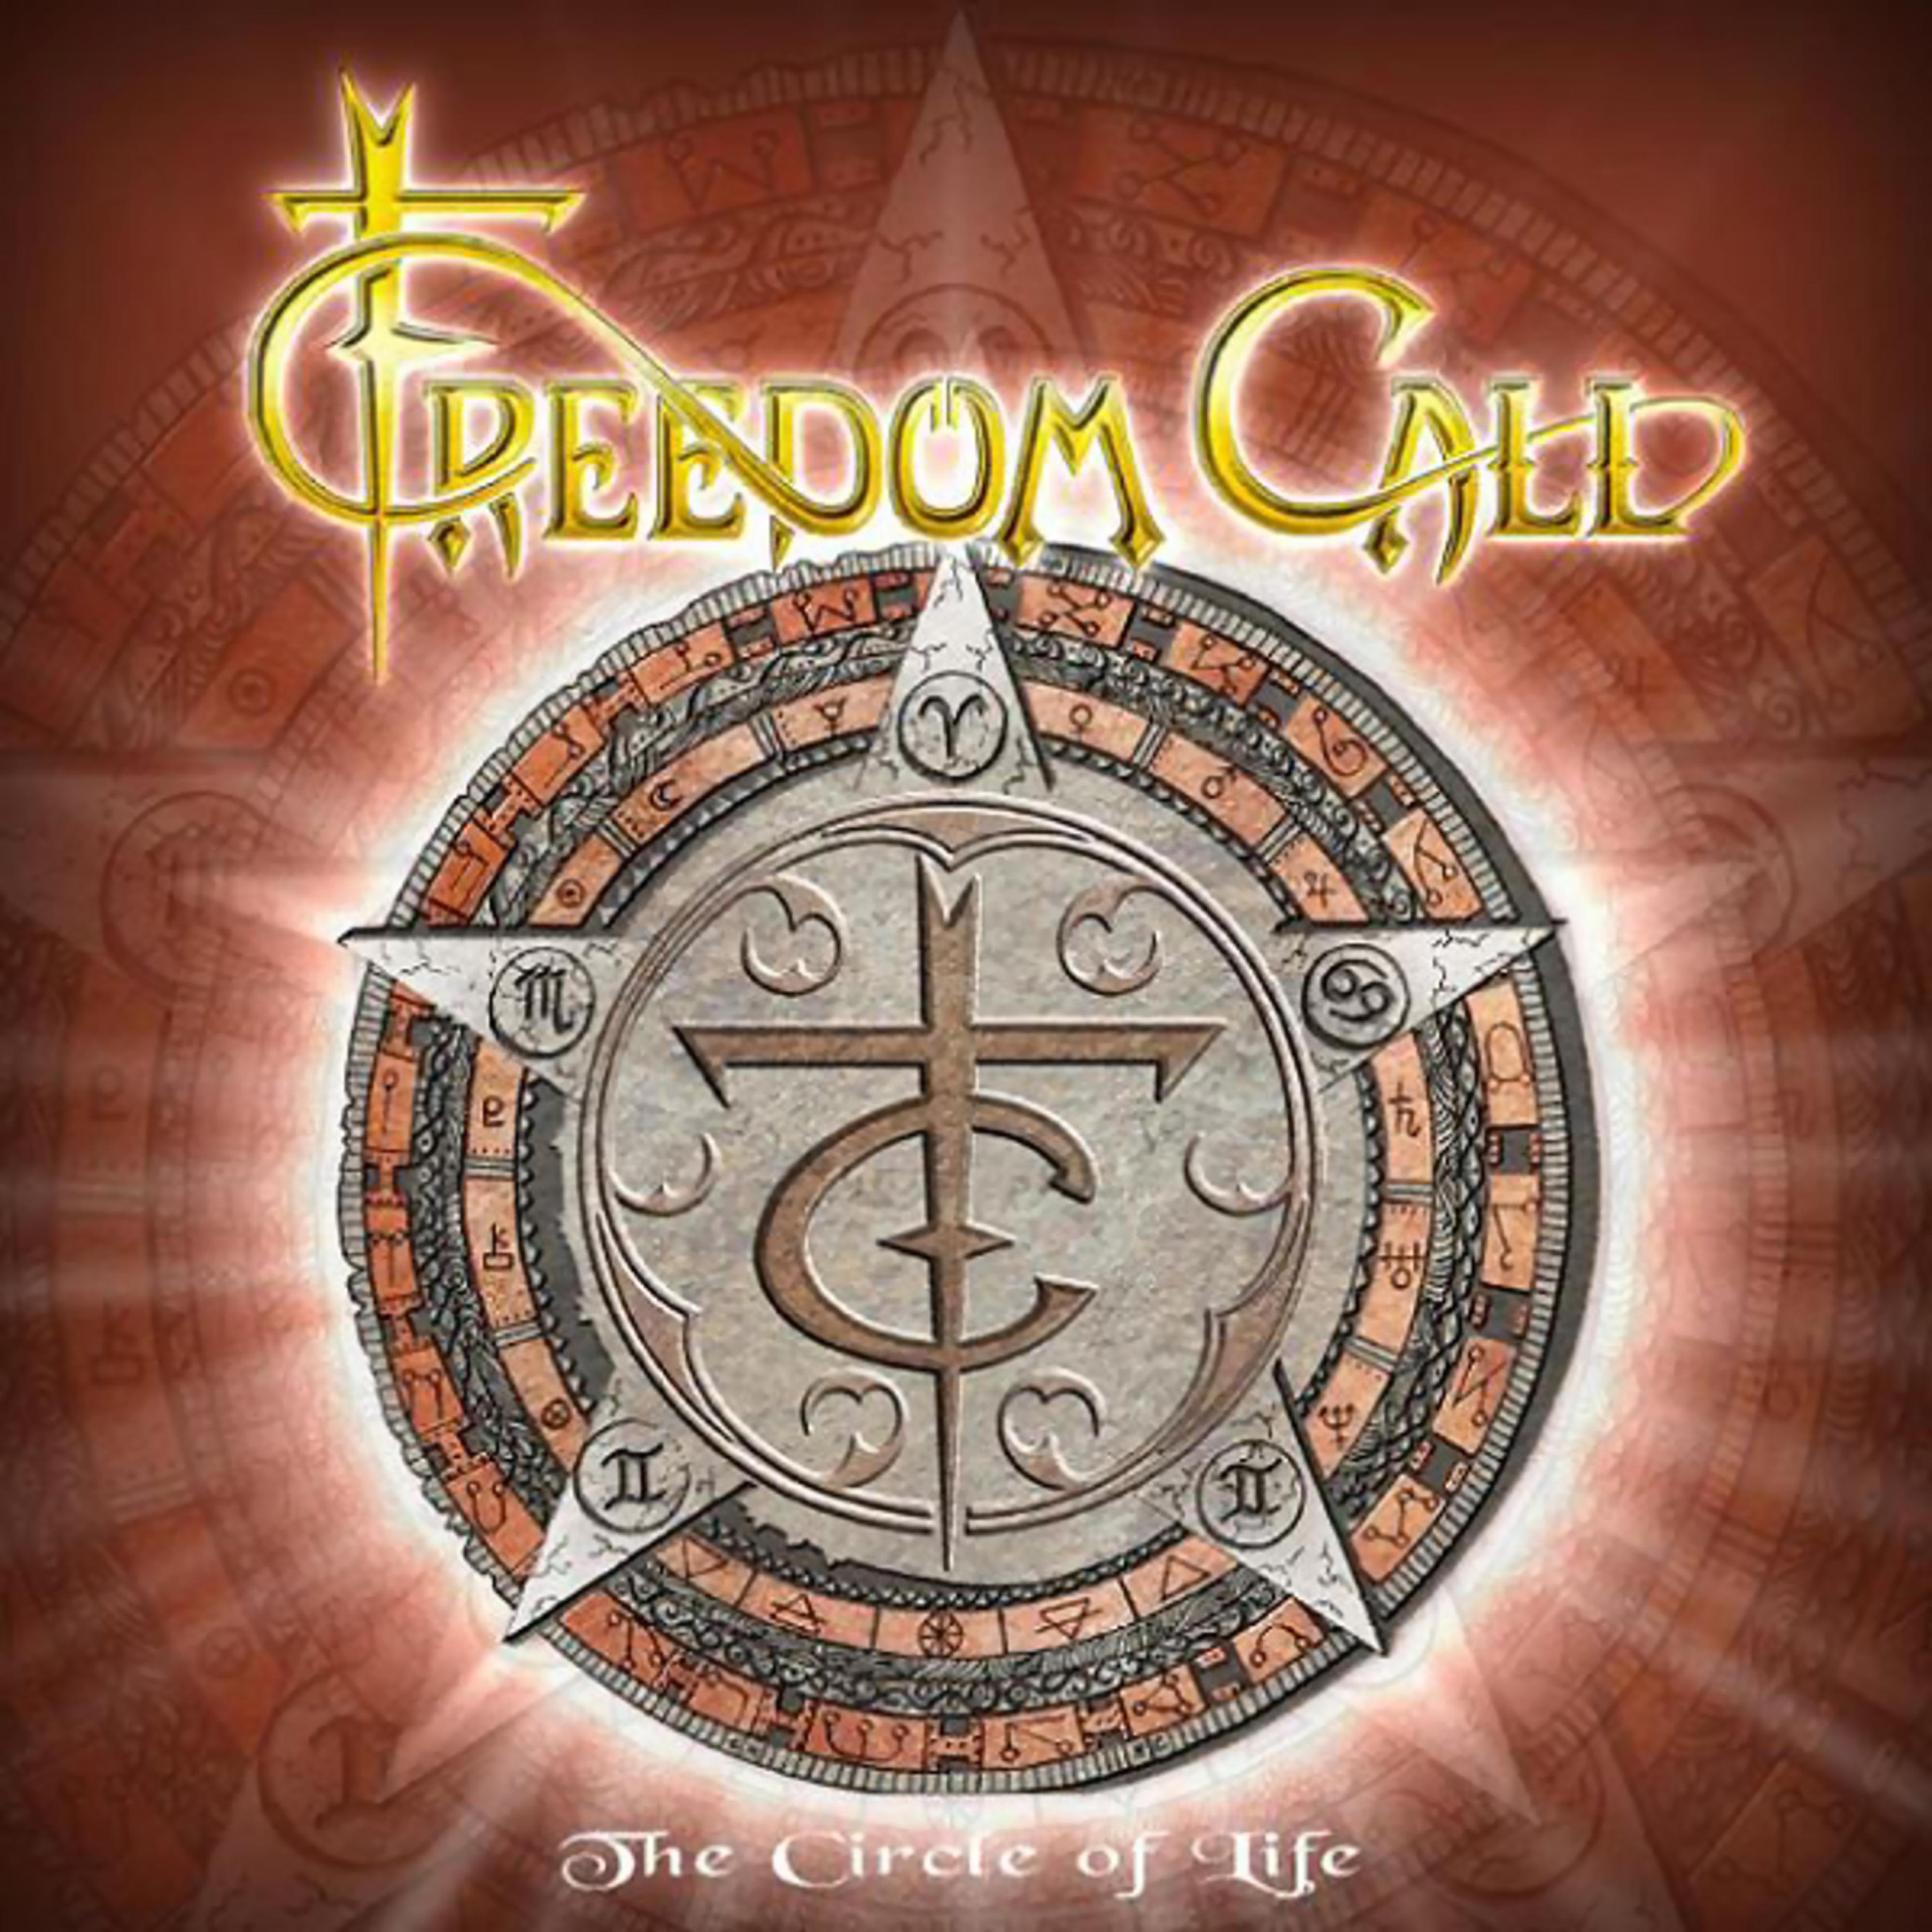 Circle called. Freedom Call 2005 - circle of Life. Freedom Call обложки альбомов. Freedom Call Band альбомы. Freedom Call лого.